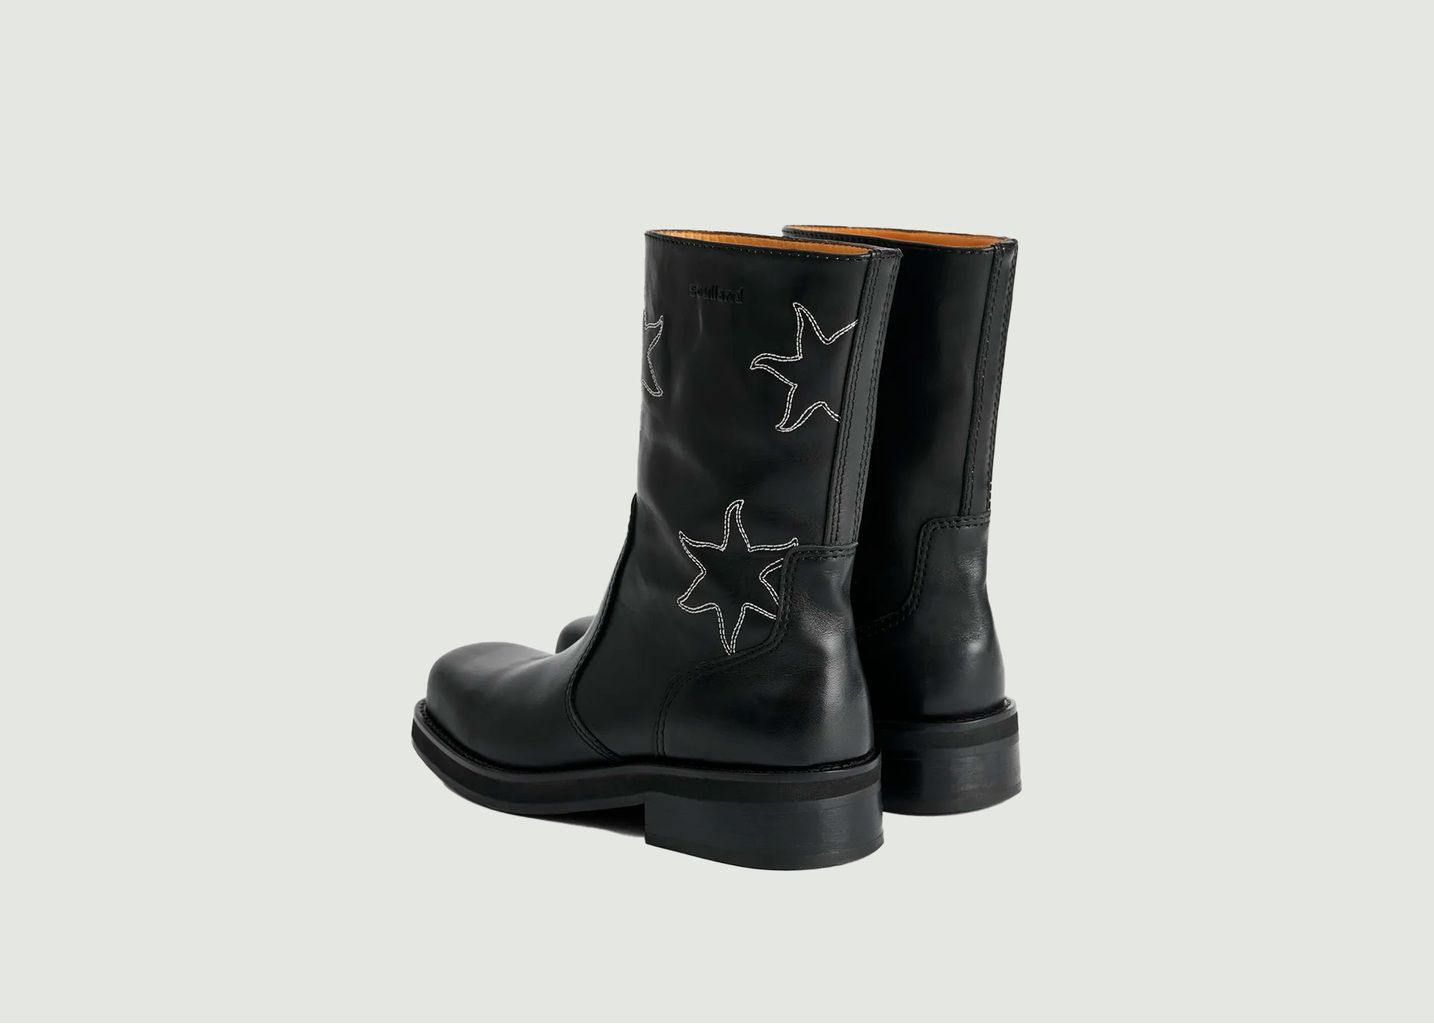 Arizona Star boots - soulland